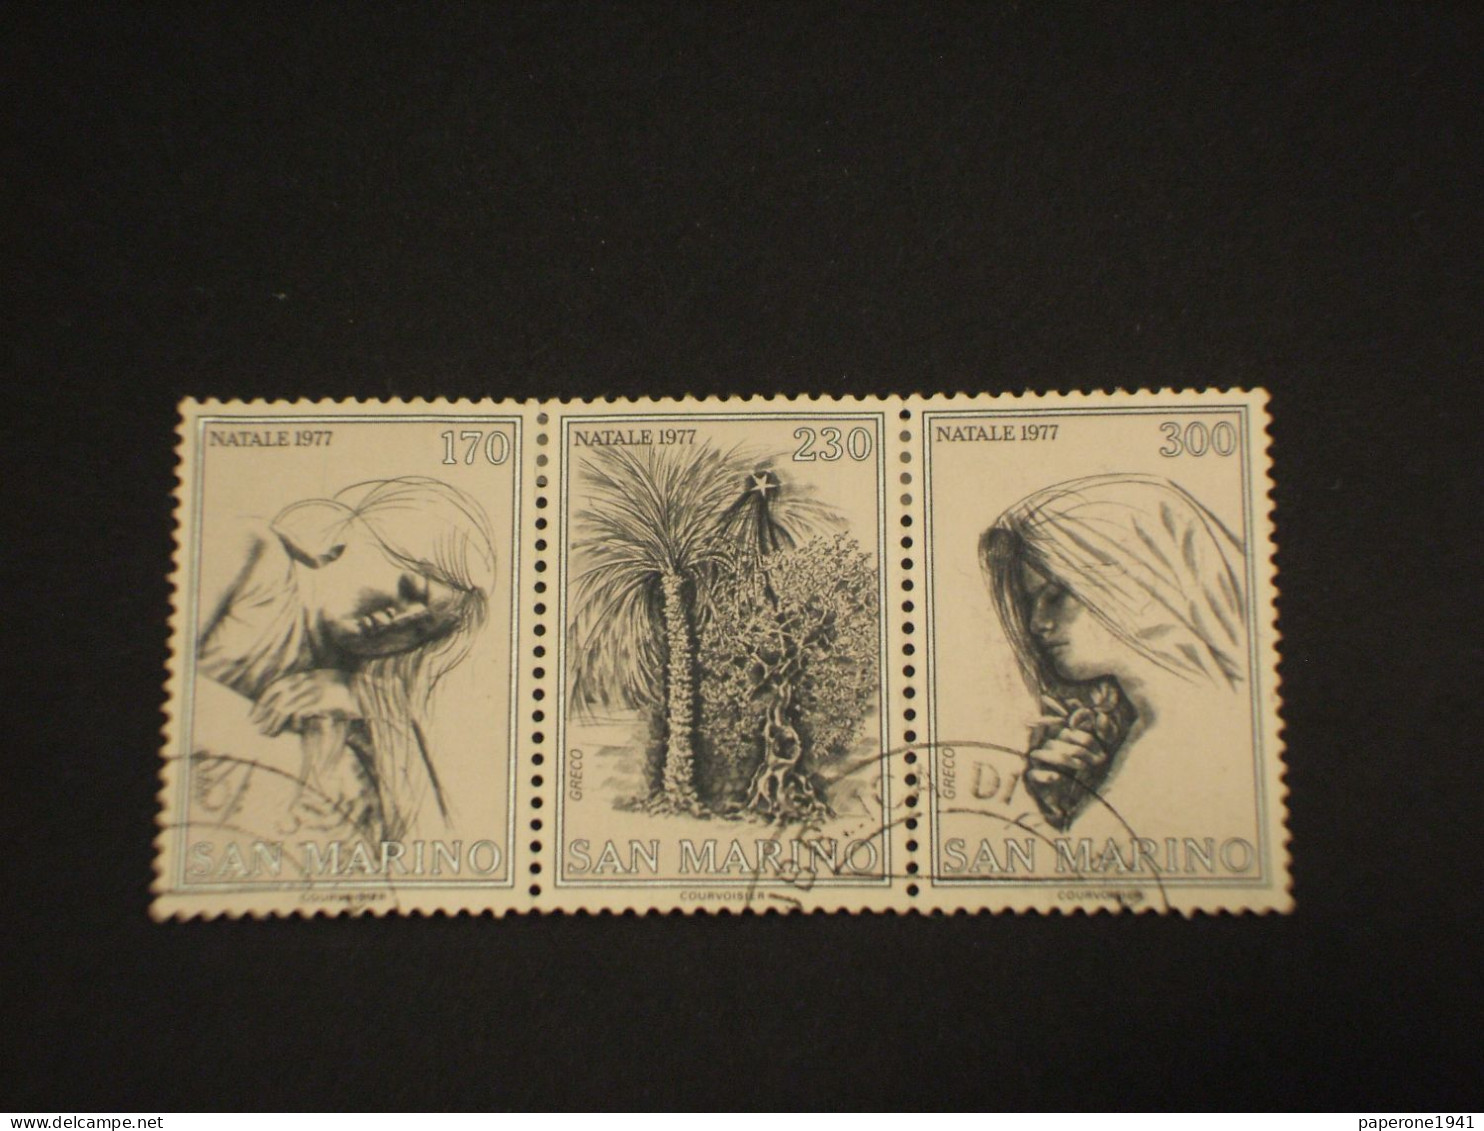 SAN MARINO - 1977 NATALE DISEGNI 3 VALORI - TIMBRATI/USED - Used Stamps